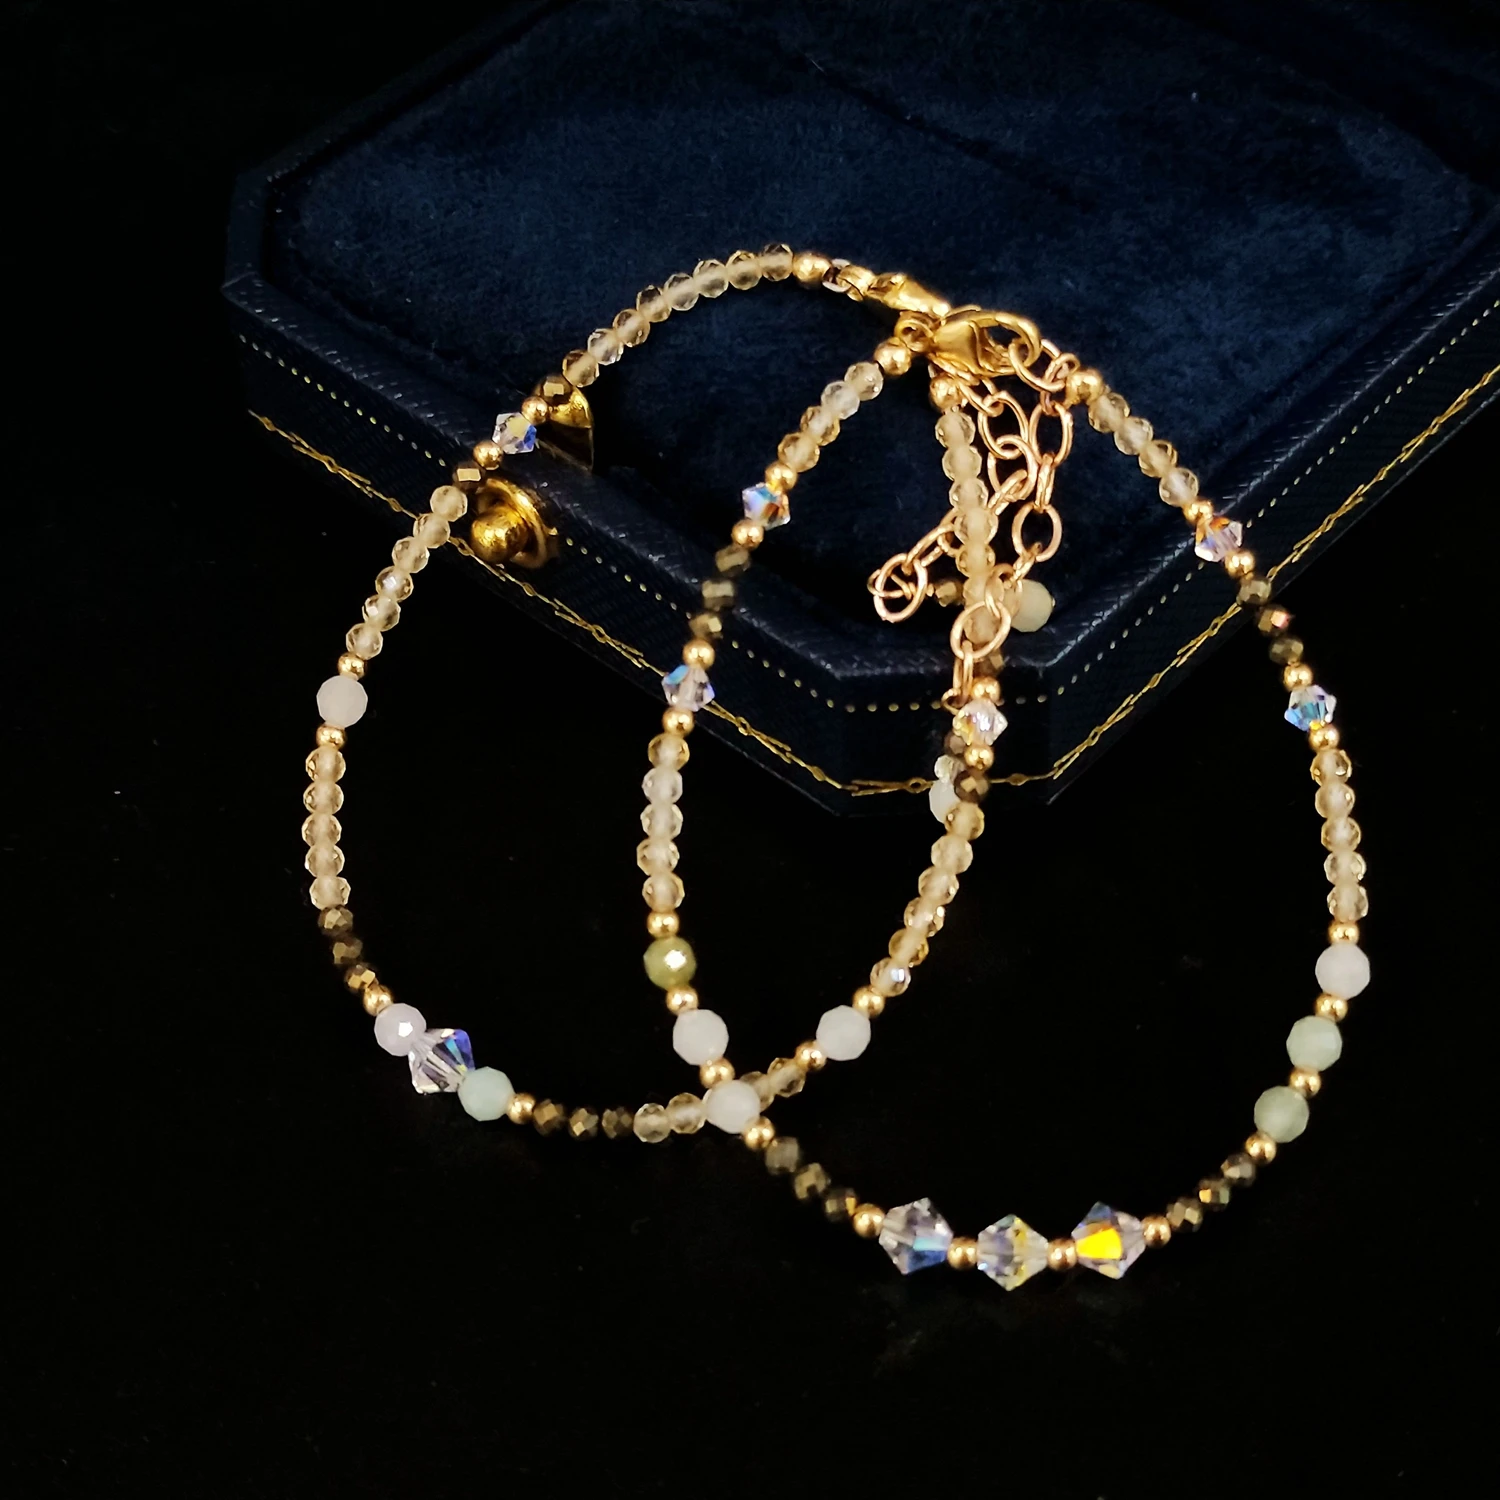 Lii Ji Citrine Jade Pyrite Austrian Crystal 14K Gold Filled Bracelet 15+3cm Natural 2mm Stone Handmade Jewelry For Women Gift